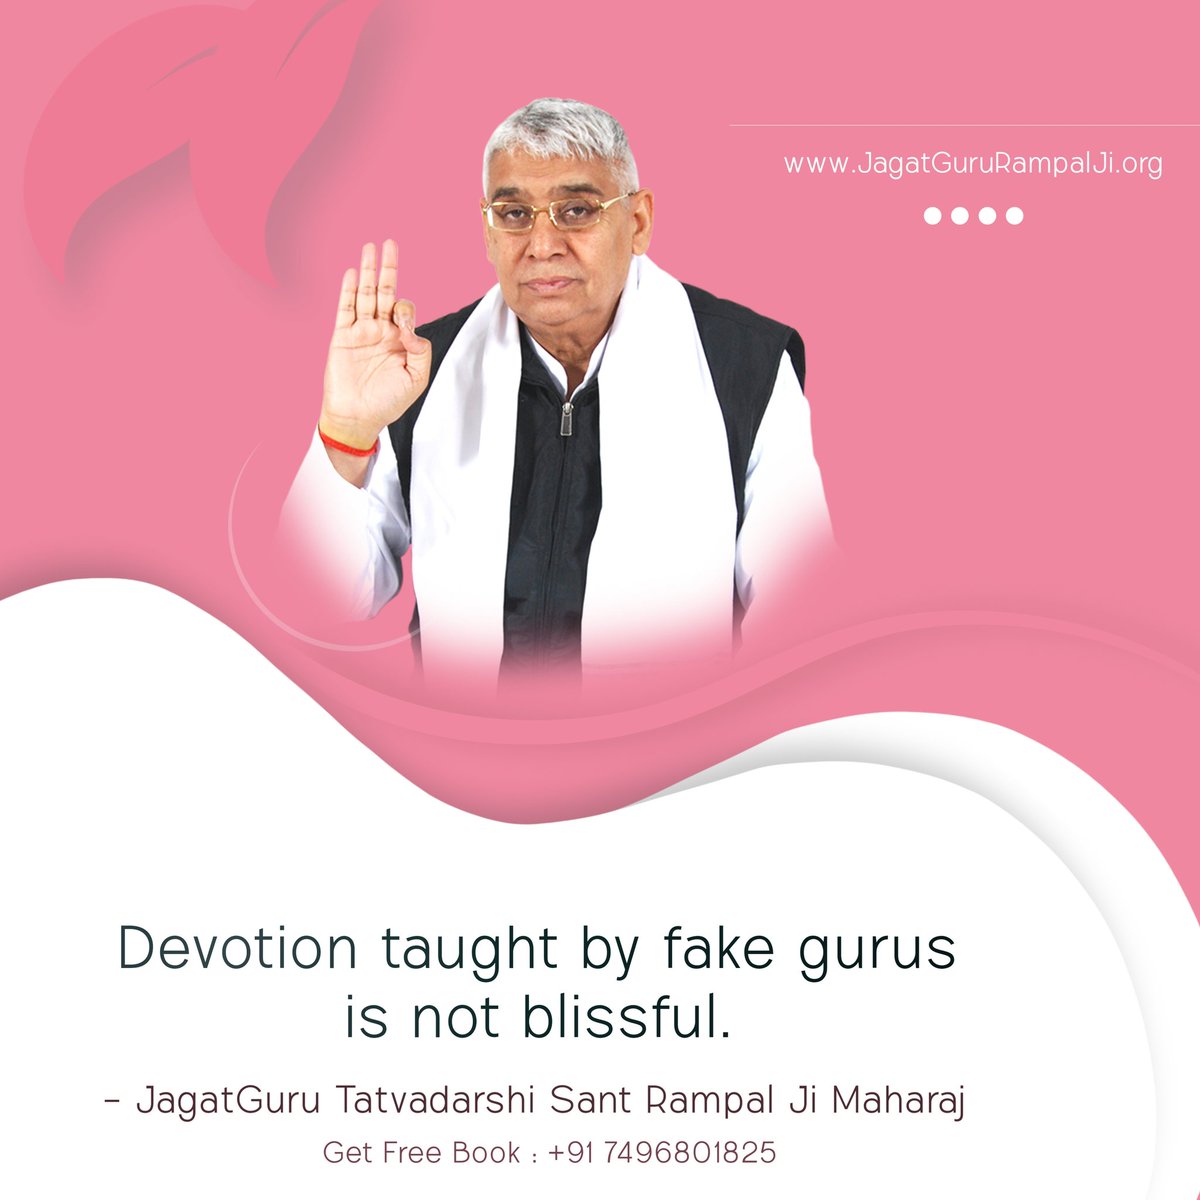 #GodMorningSaturday Devotion taught by fake gurus is not blissful. - JagatGuru Tatvadarshi Sant Rampal Ji Maharaj